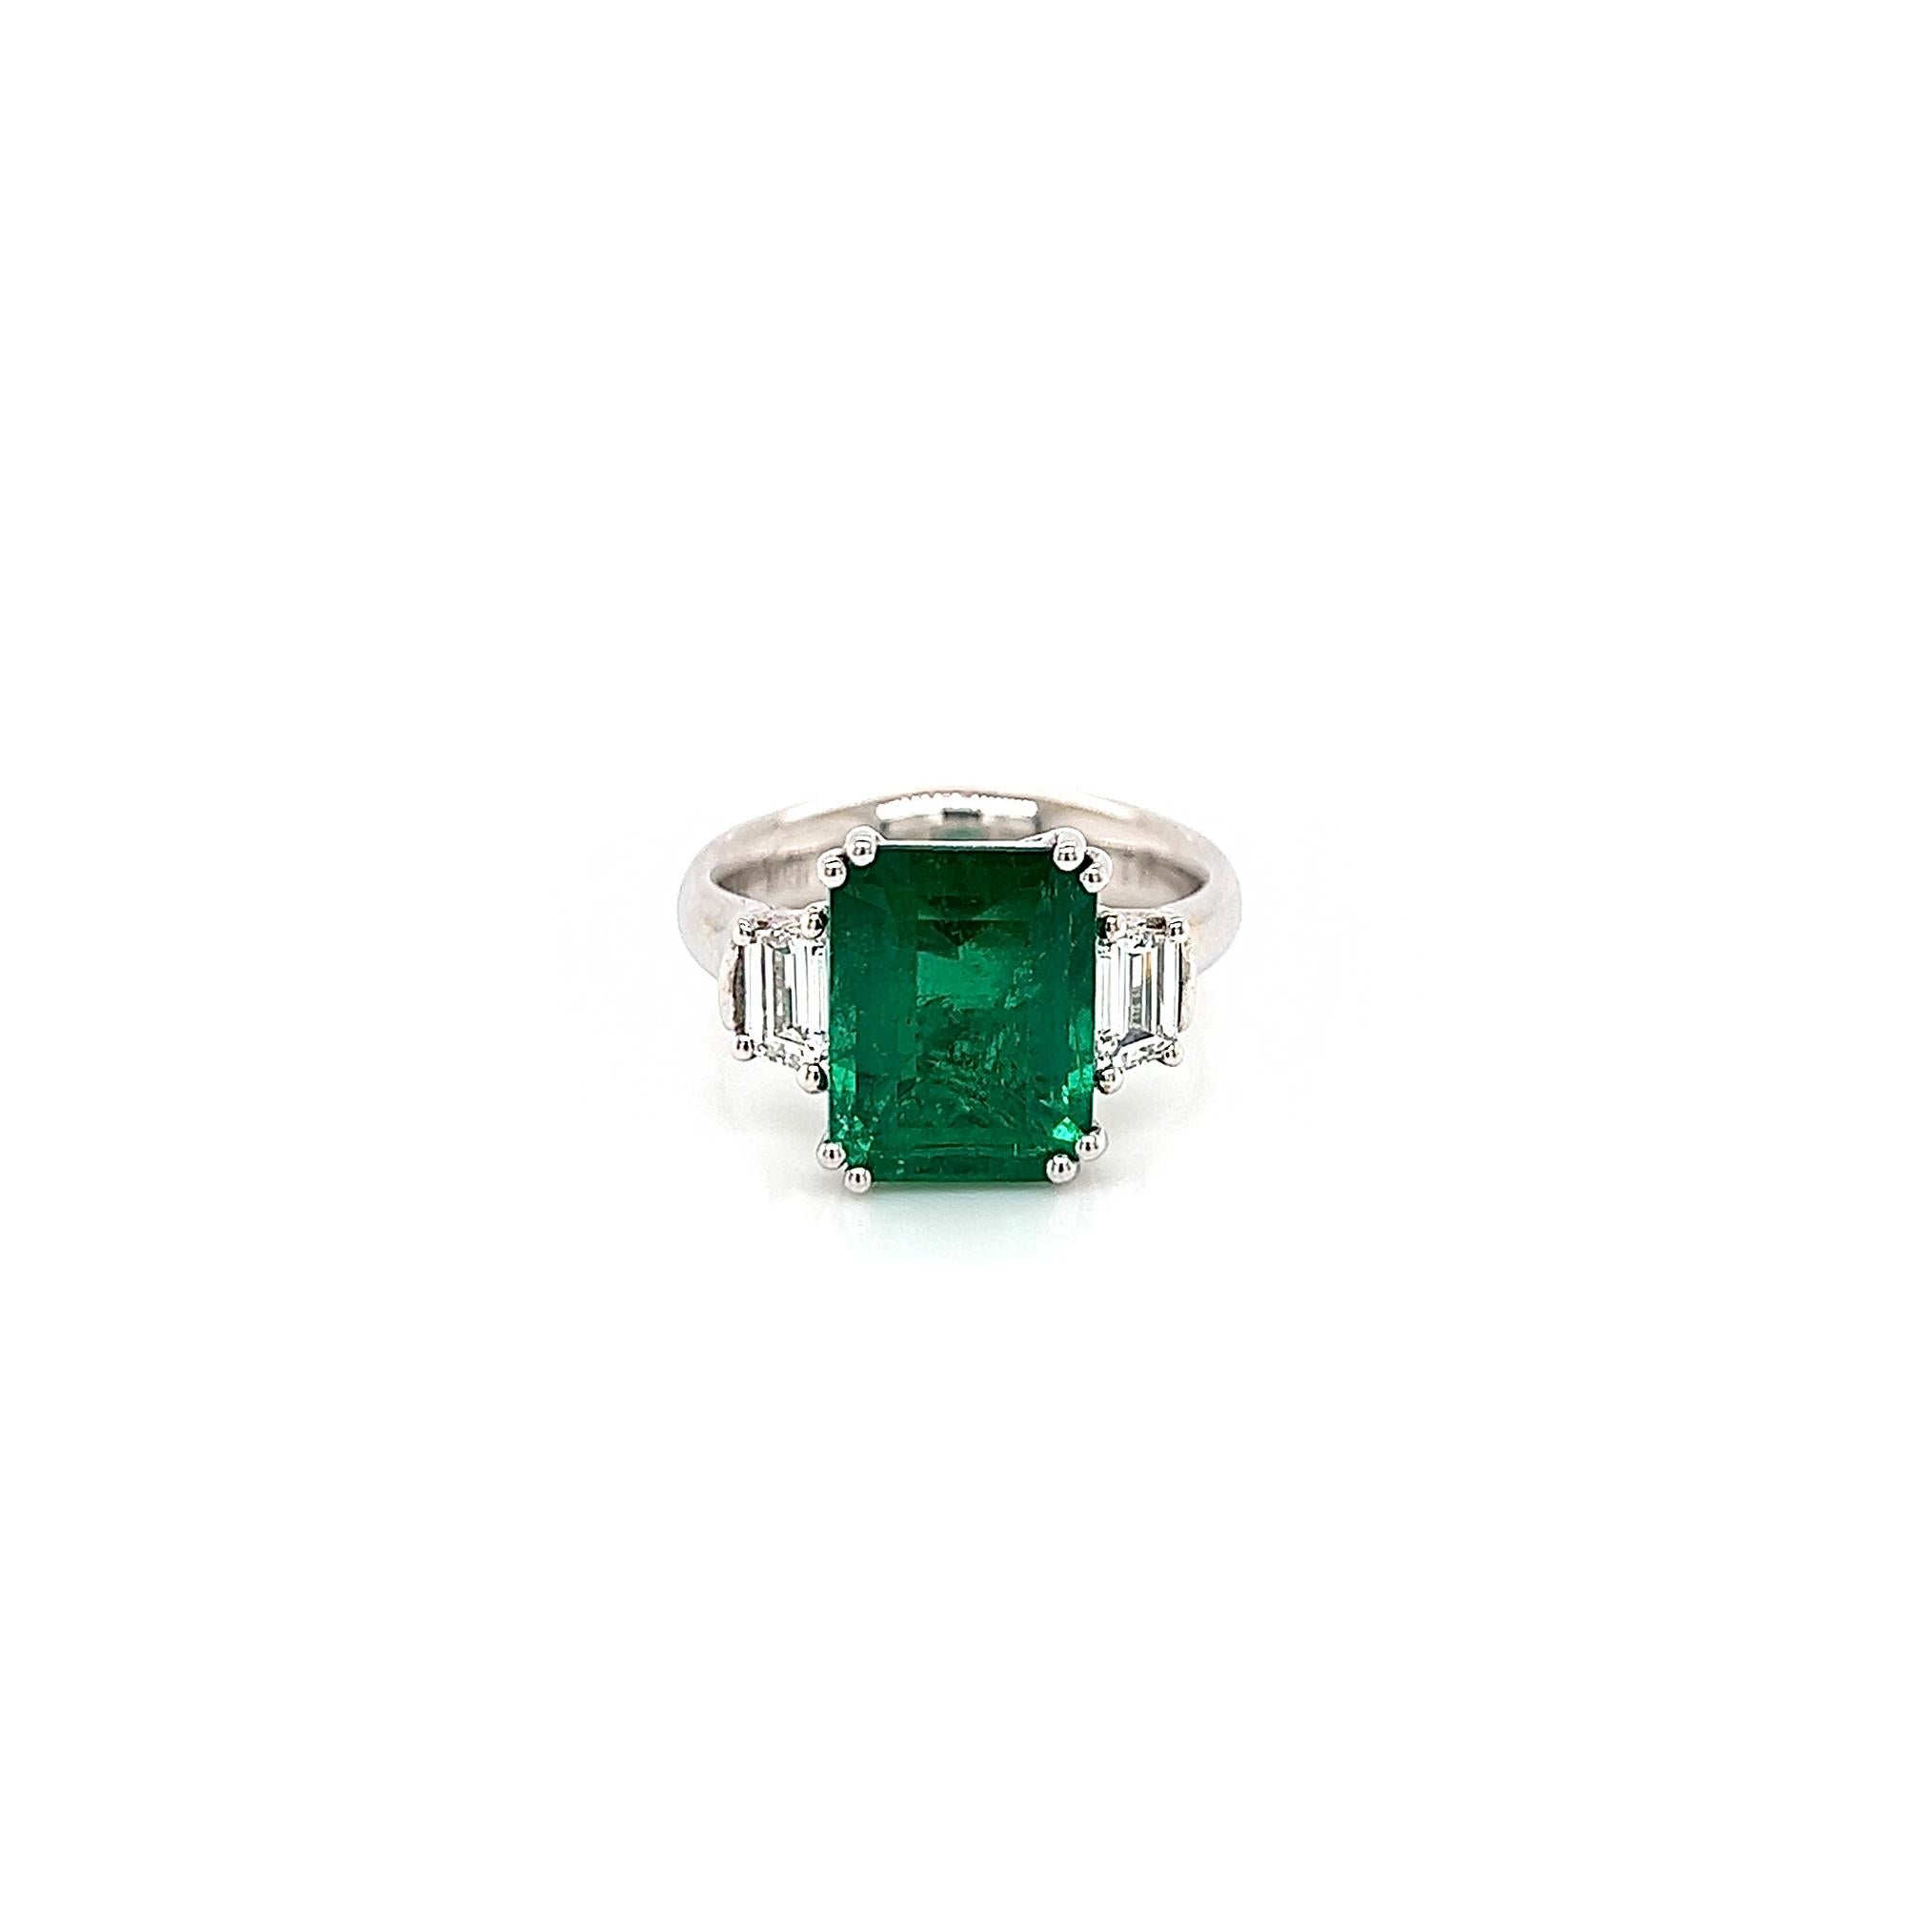 4.60 Total Carat Emerald and Diamond Three Stone Ladies Engagement Ring. GIA Certified.

-Metal Type: 18K White Gold
-3.97 Carat Emerald Cut Natural Beryl Colombian Emerald, GIA Certified 
-Emerald Color: Green
-Emerald Measurements: 11.59 x 8.88 x